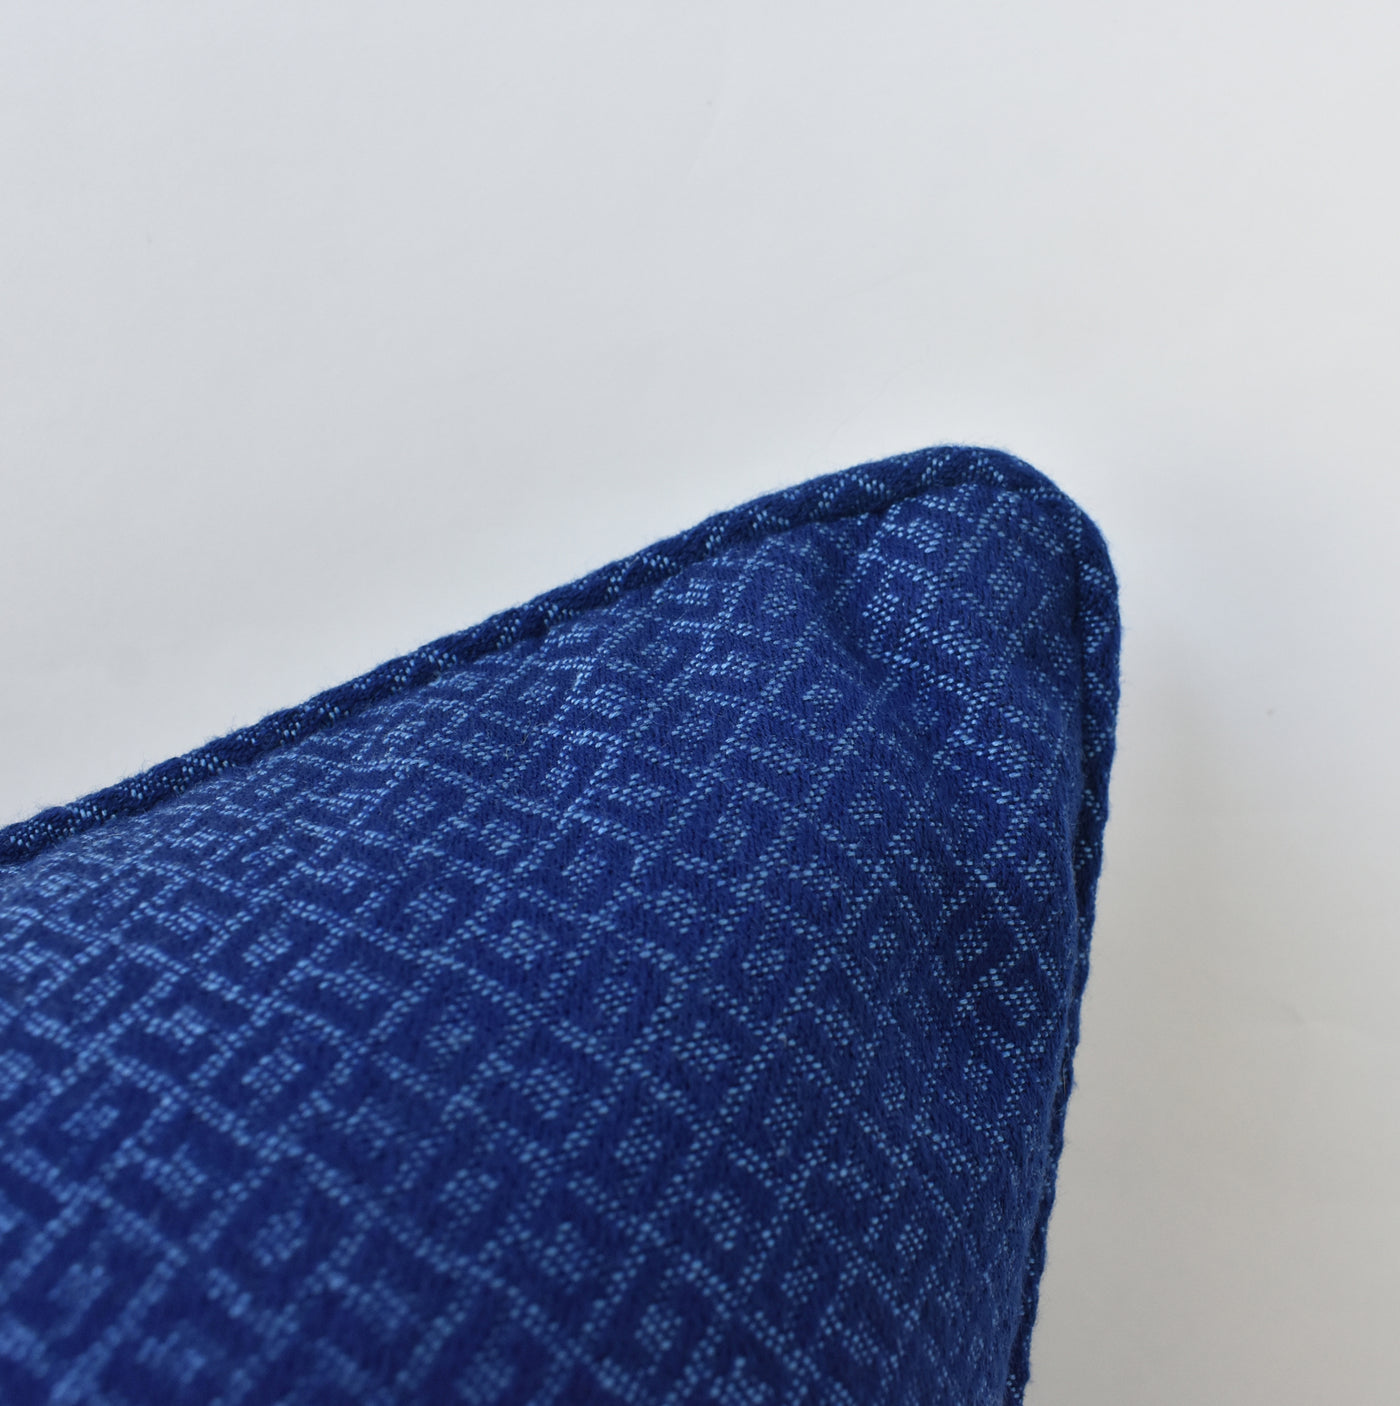 Royal Blue Diamond Cushion - Highgate House Online - Cushions